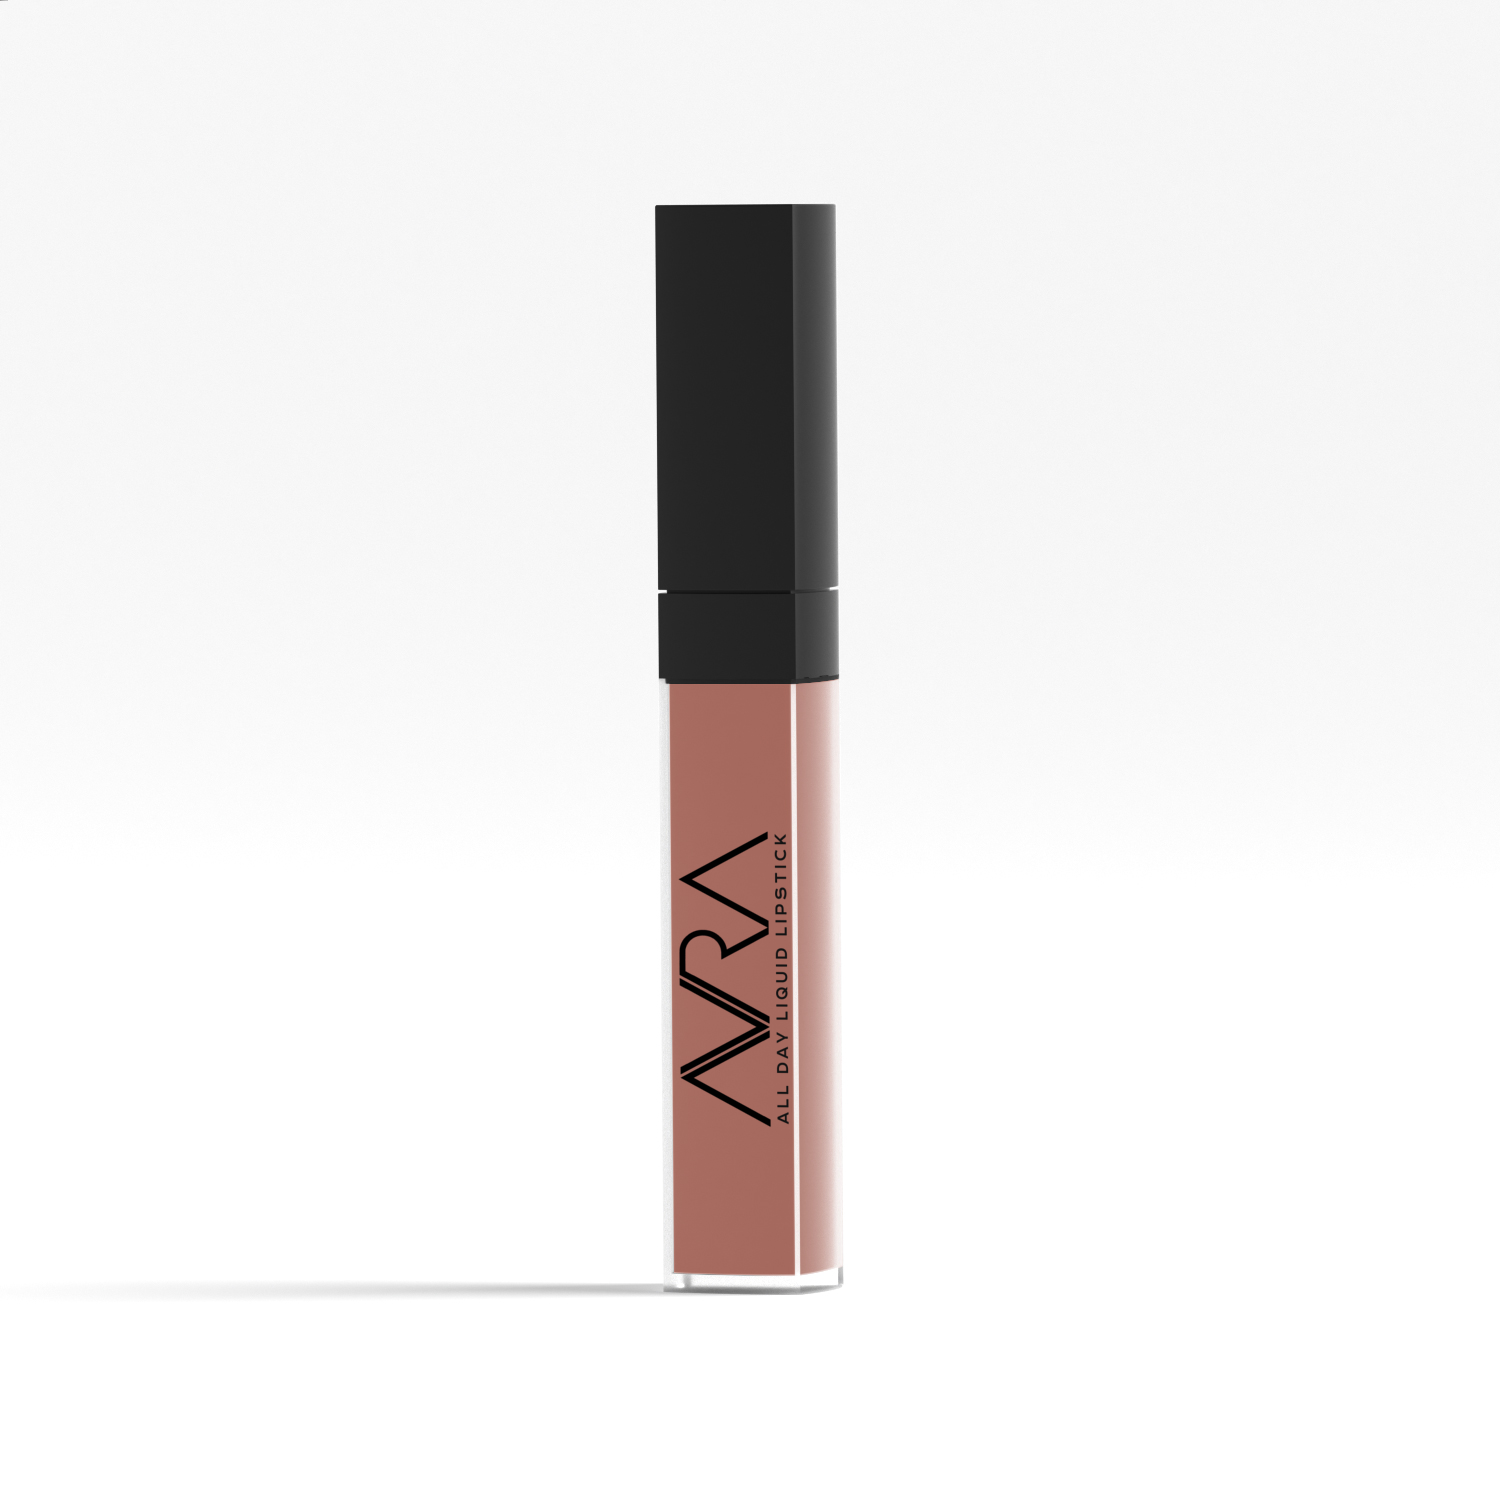 AVRA Beauty Liquid Lipstick in Shade Reliquia